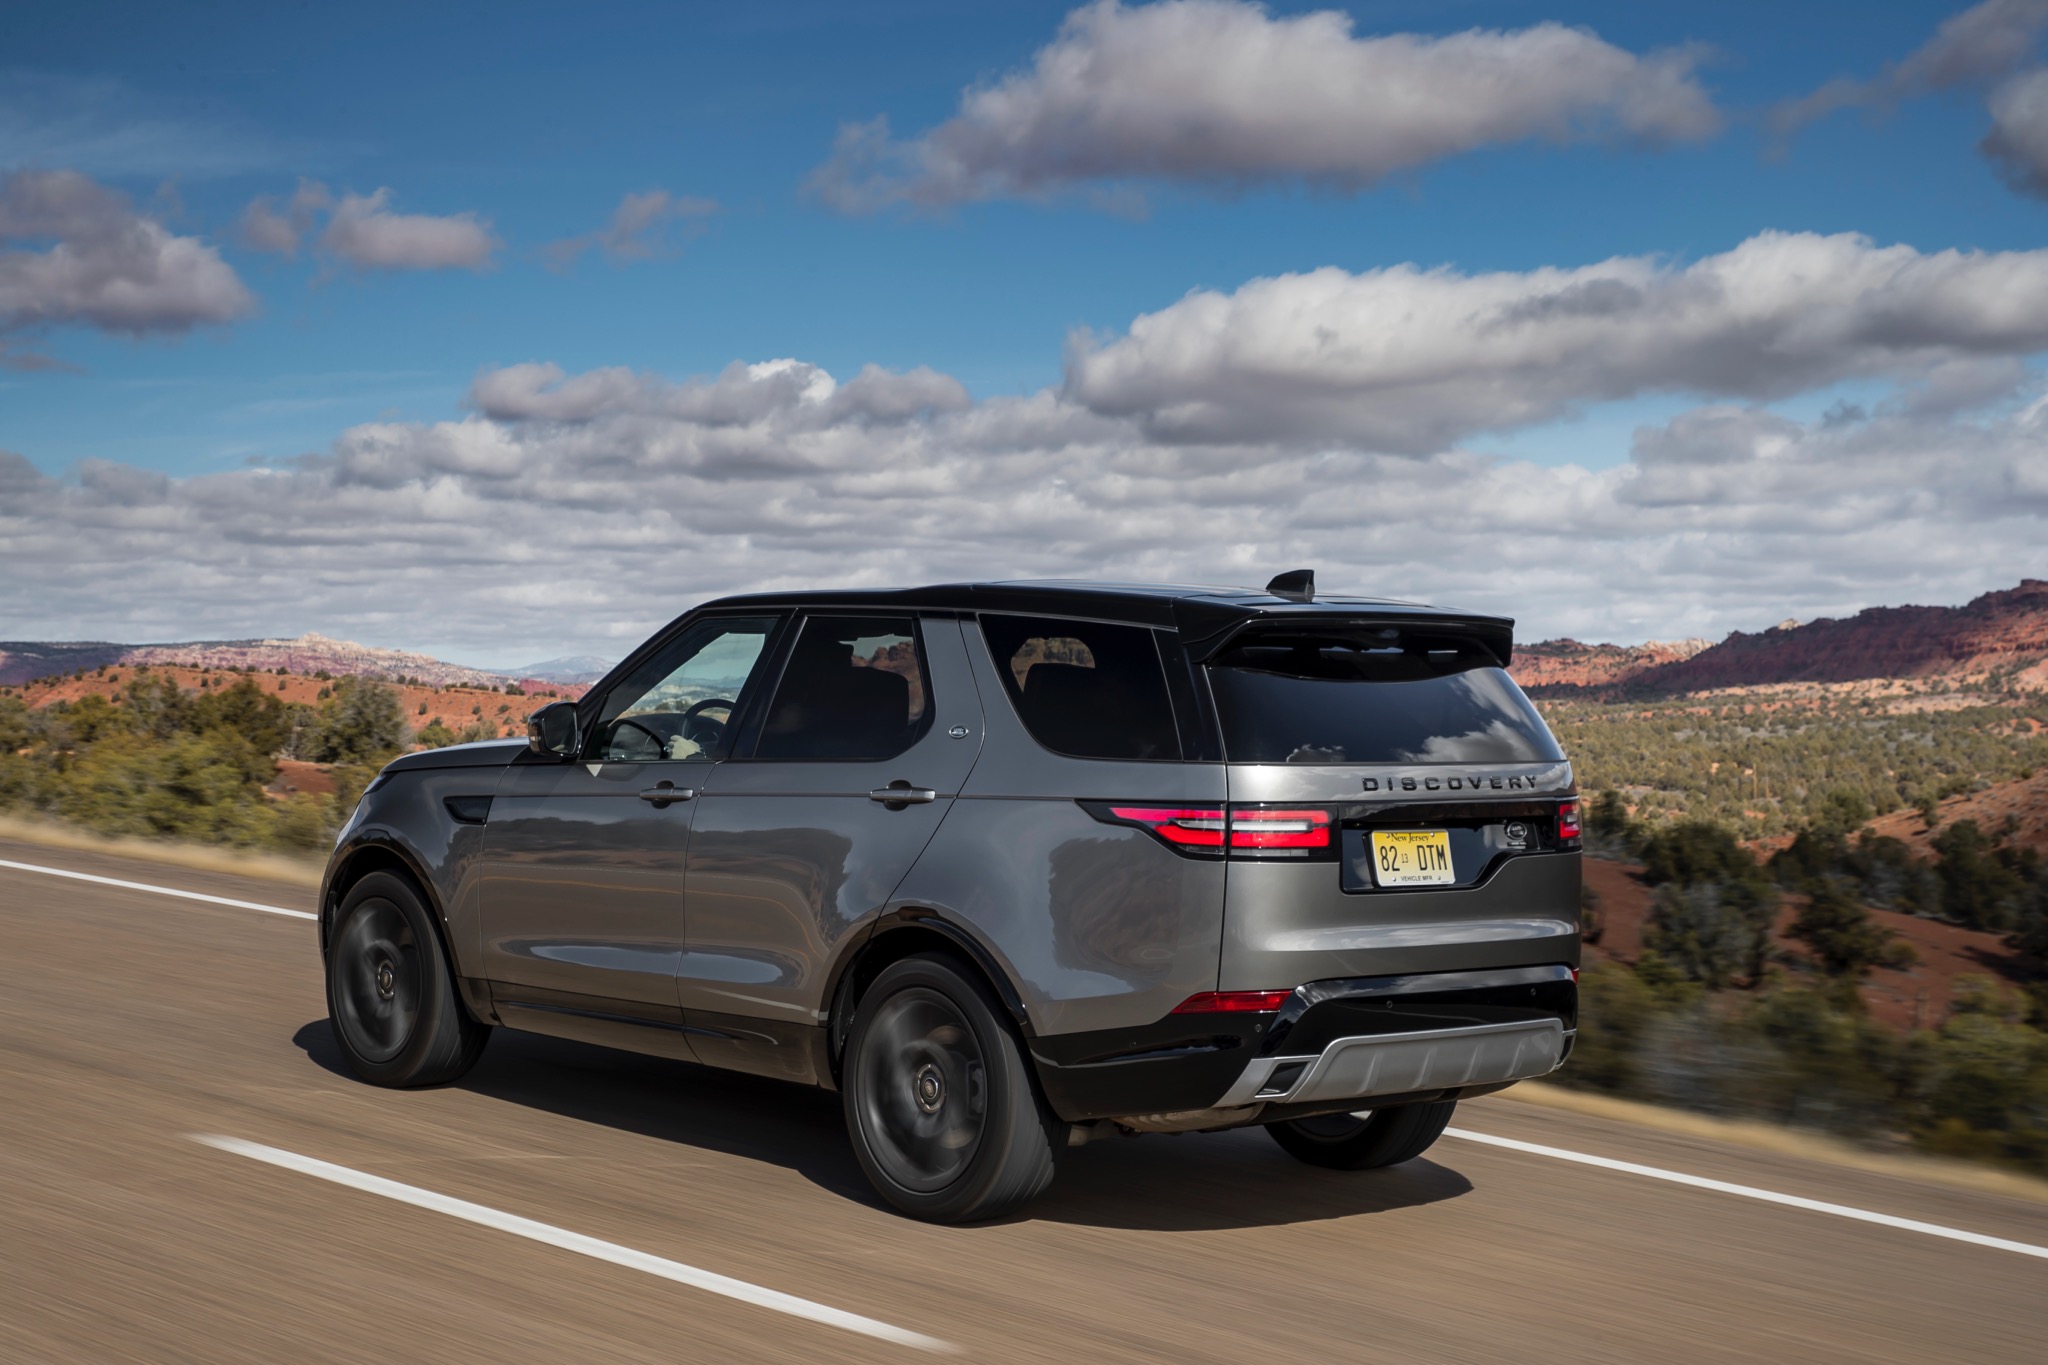 2017 Land Rover Discovery review - photos | CarAdvice